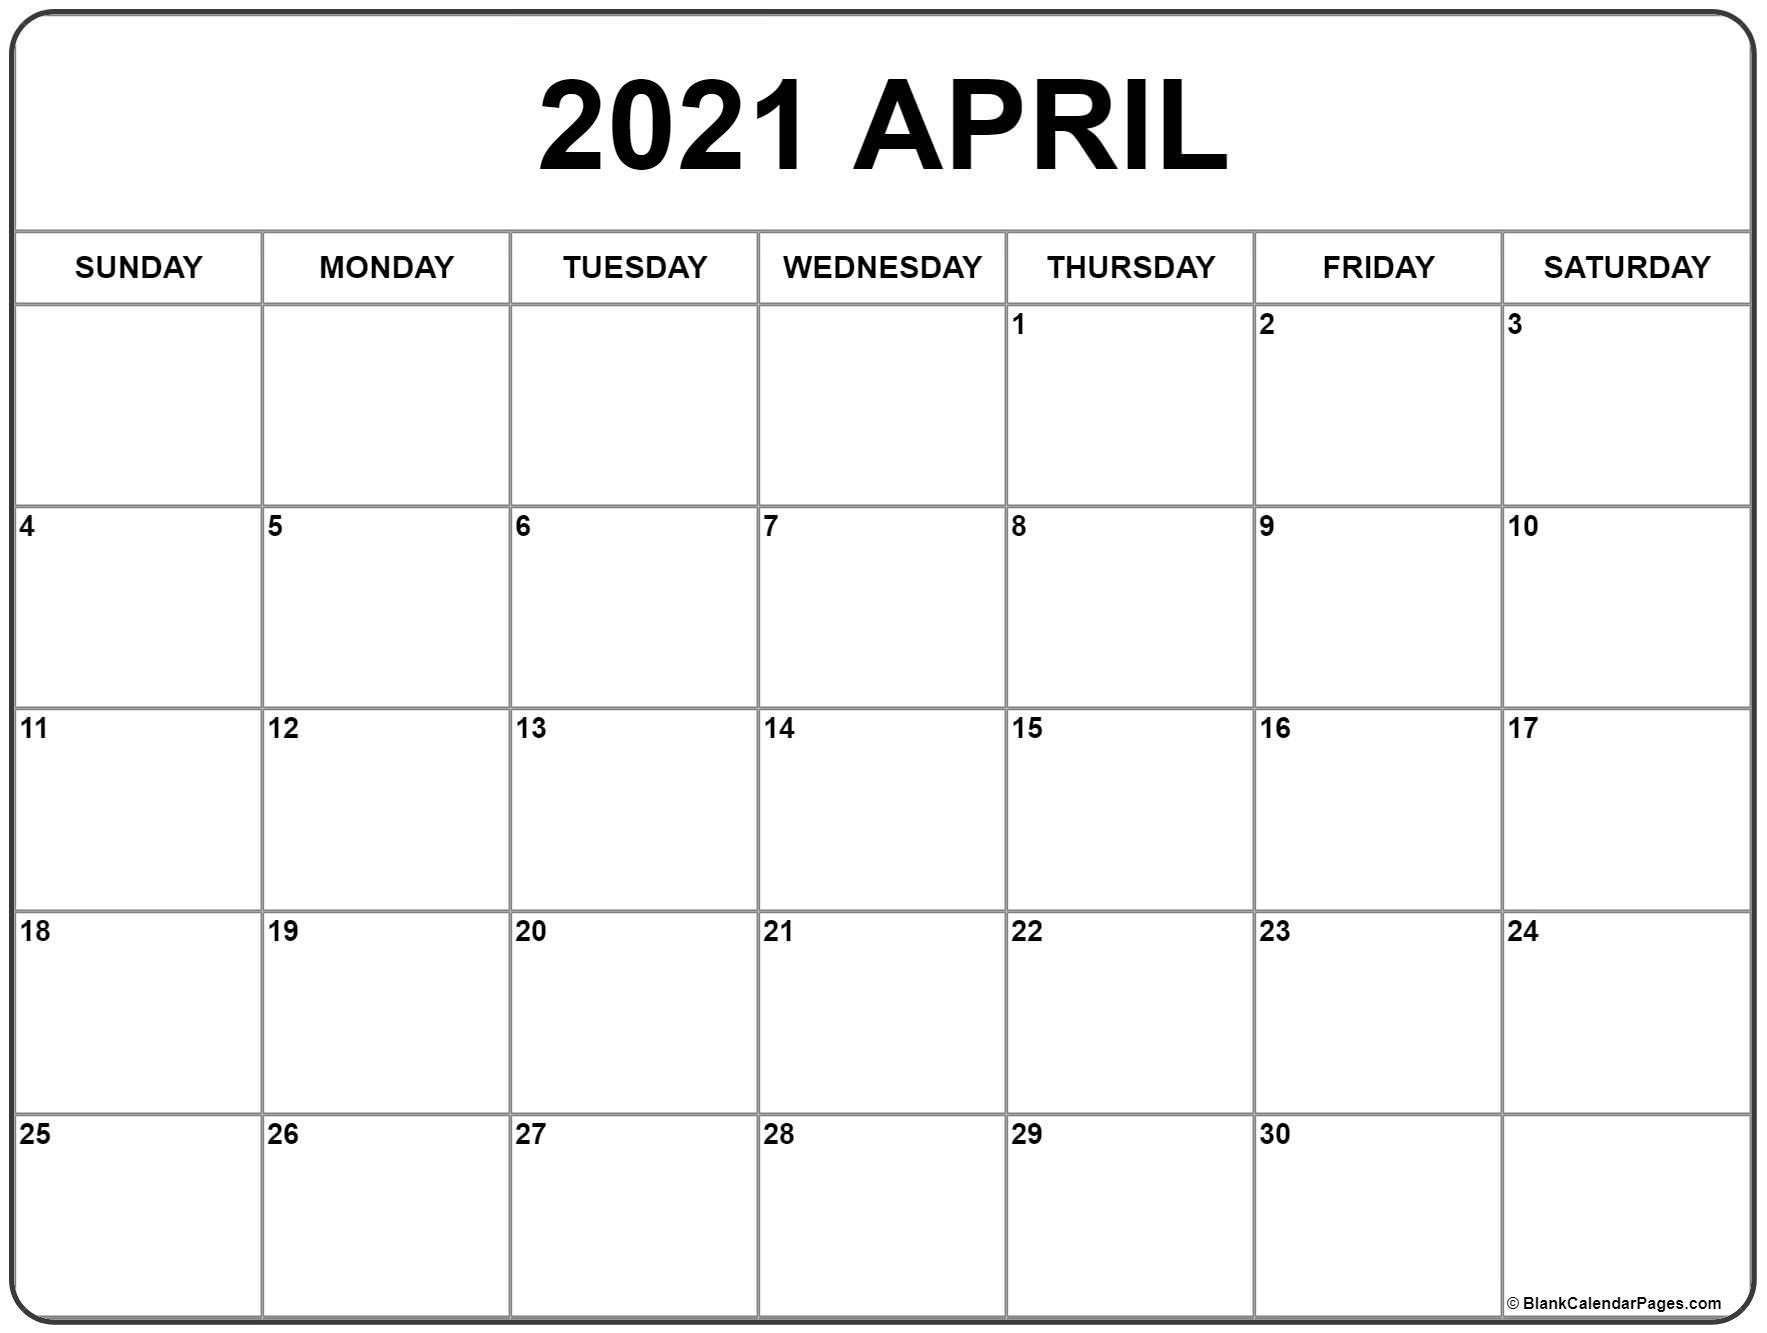 CAL=April 2021 calendar